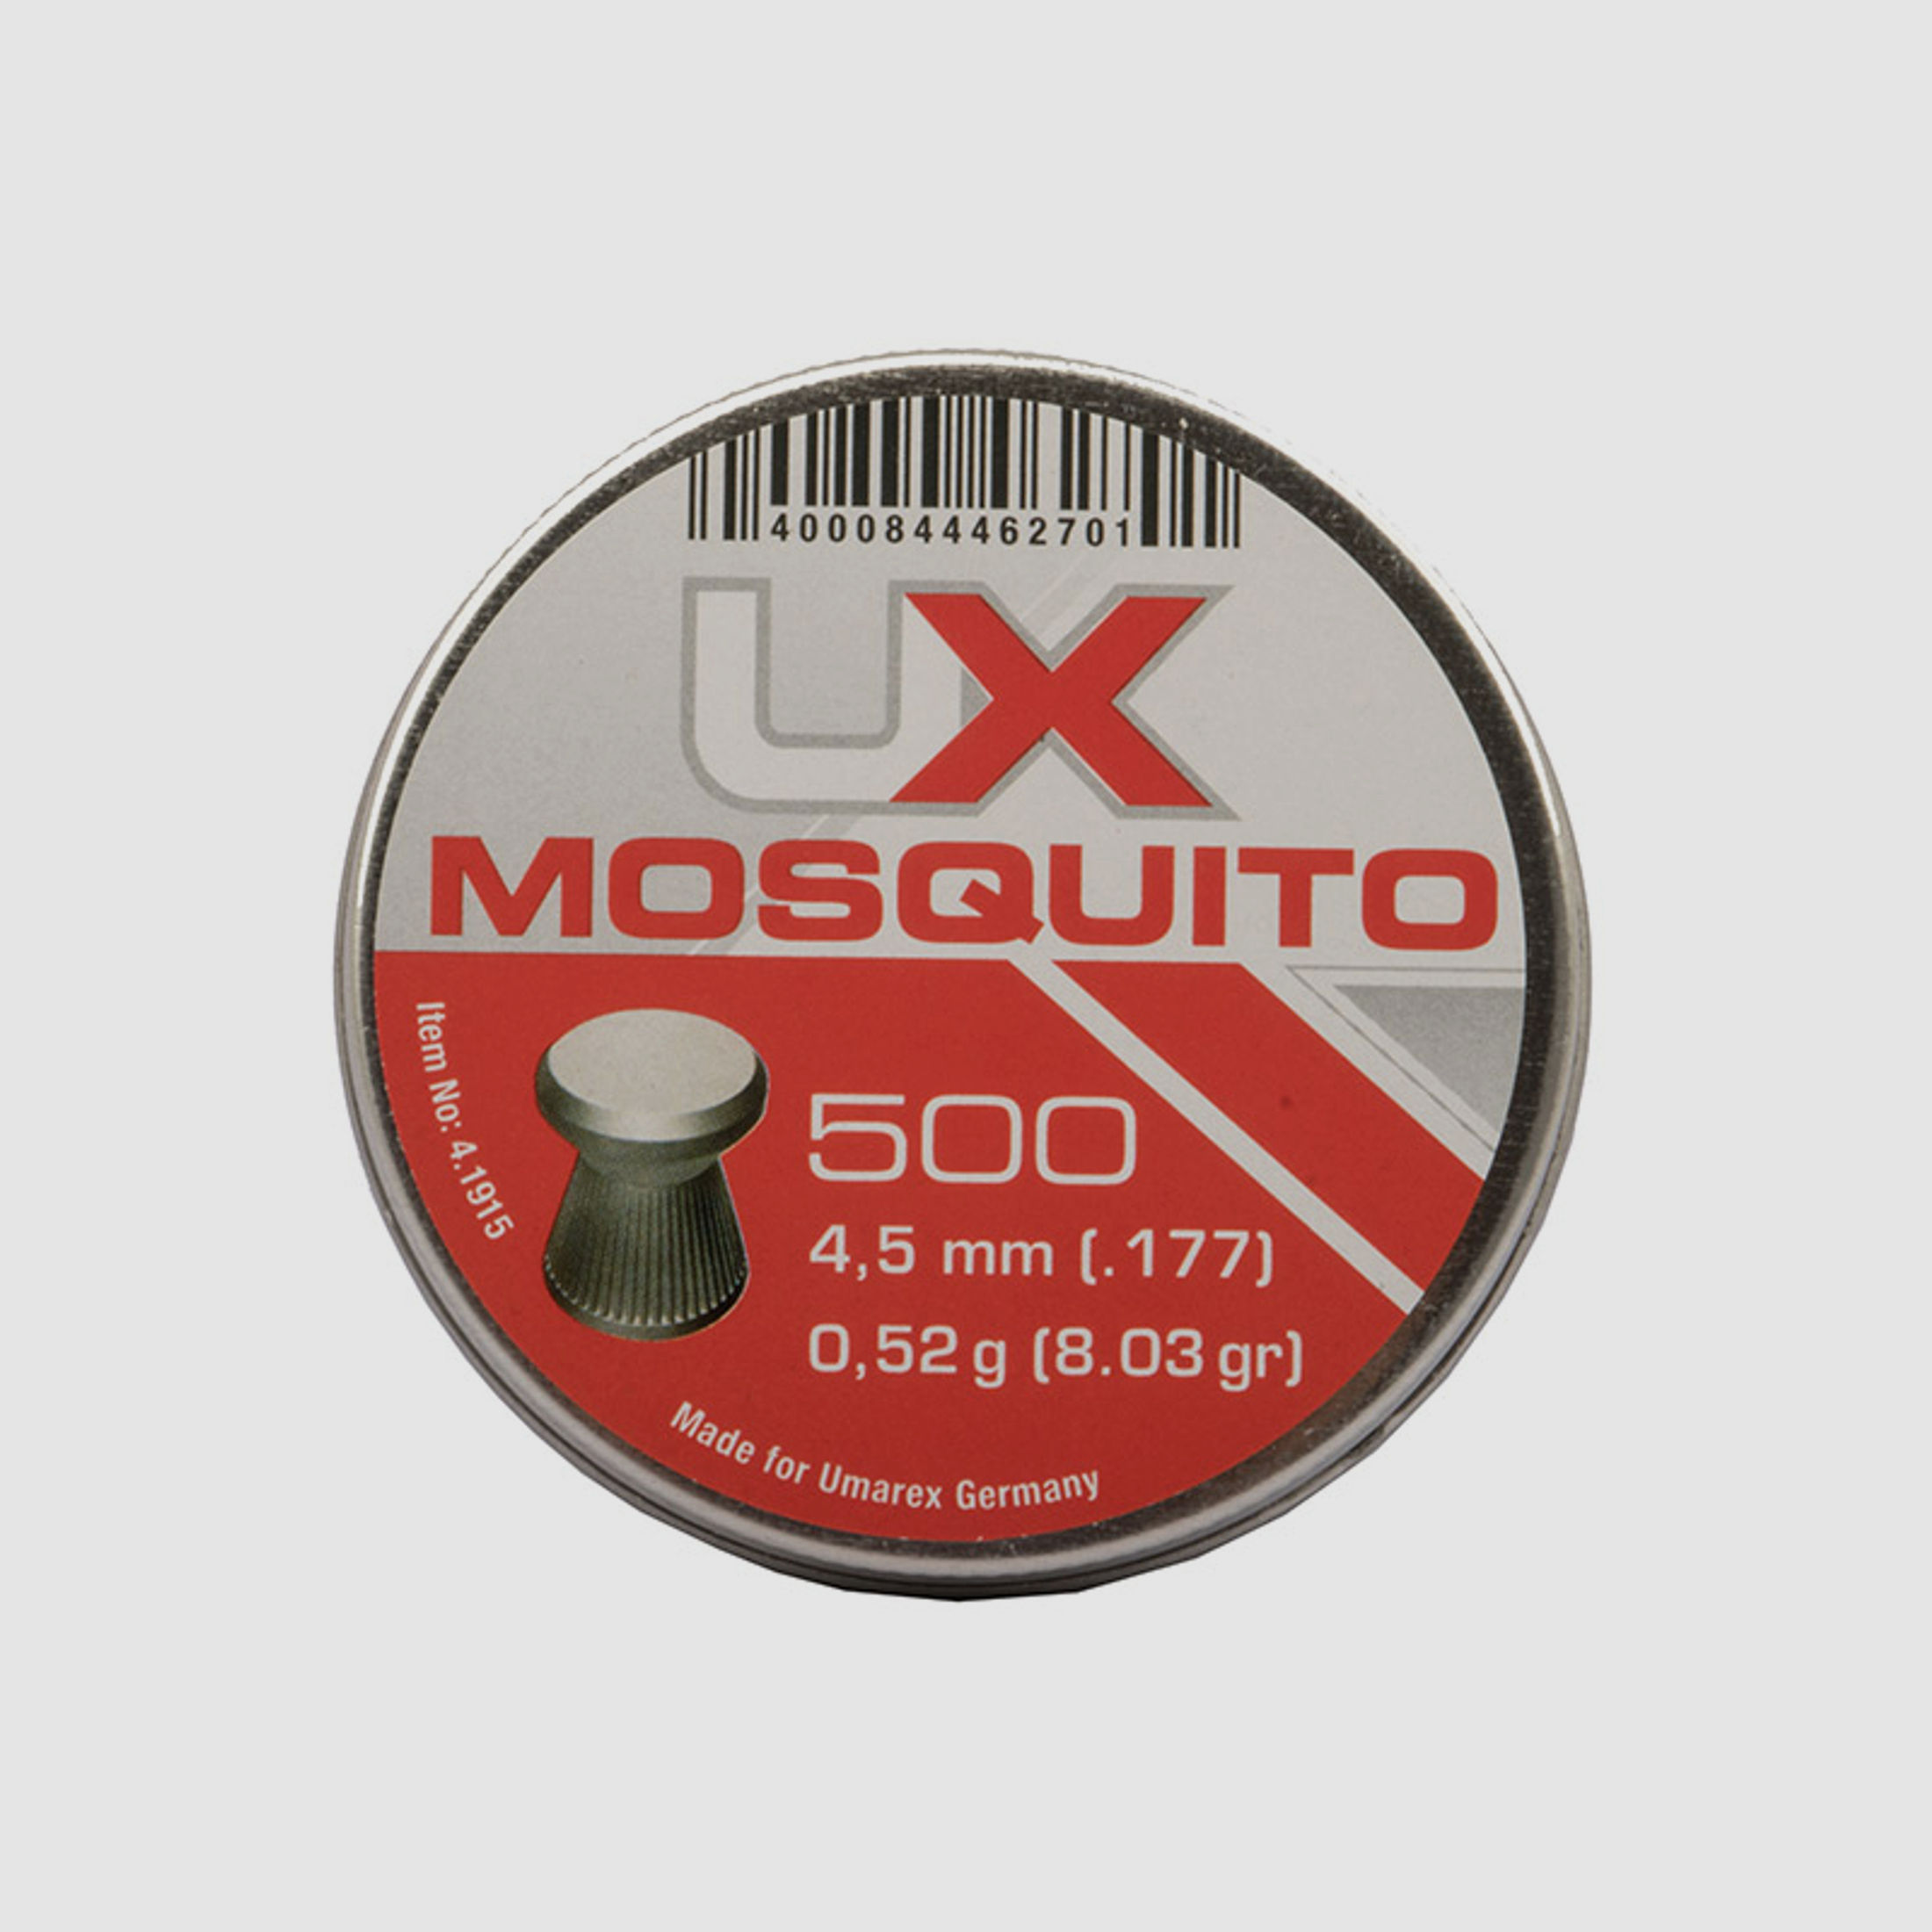 Flachkopf Diabolos Umarex Mosquito Kaliber 4,5 mm 0,52 g geriffelt 500 StĂĽck